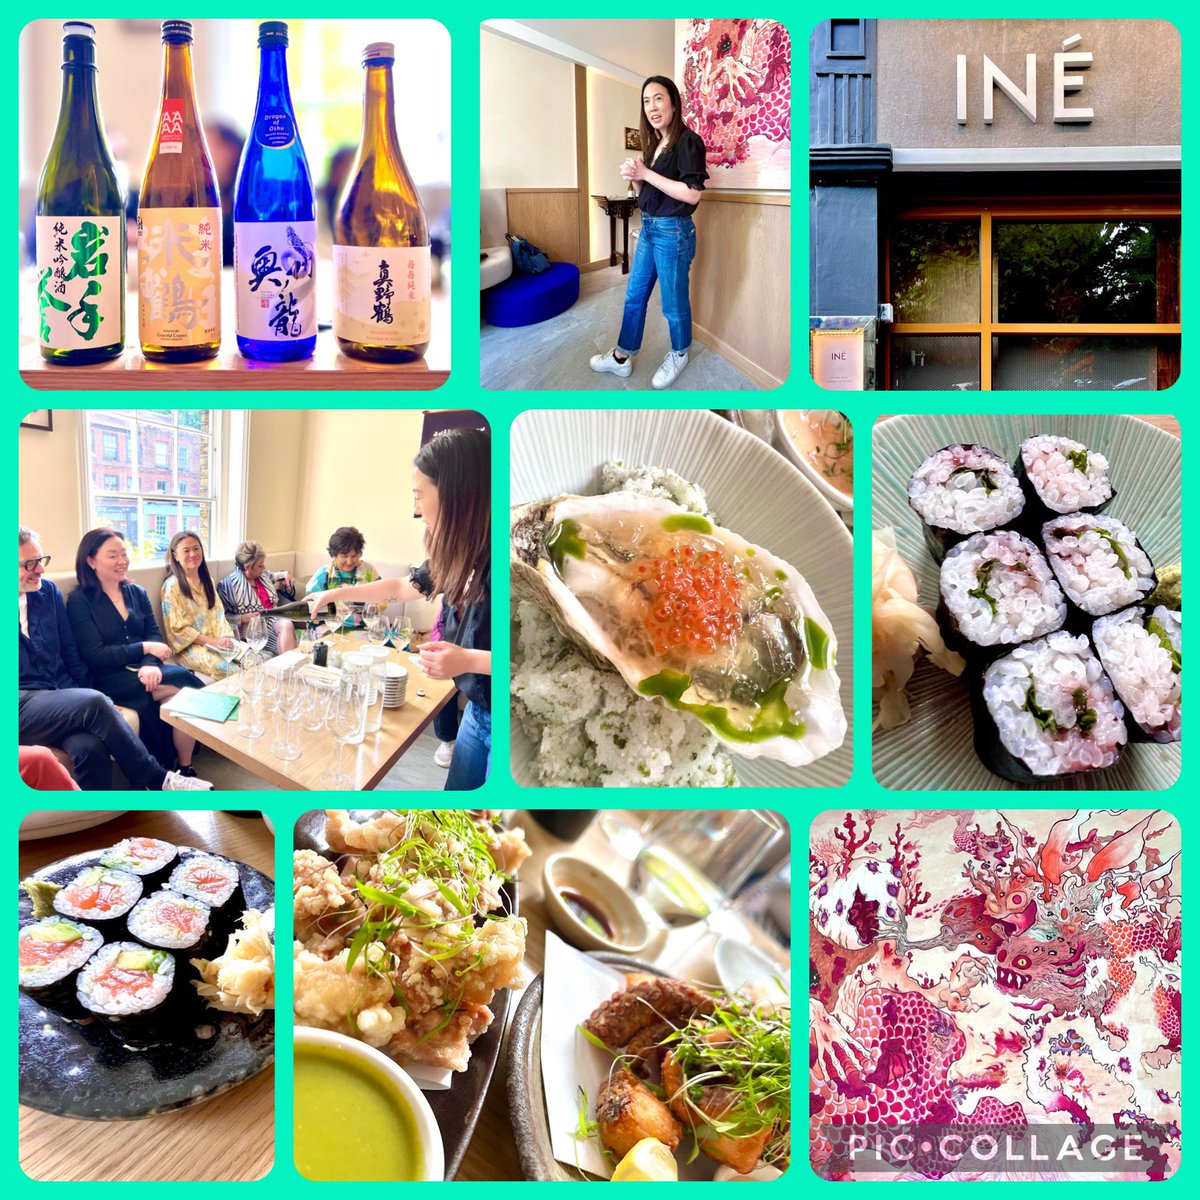 Sake Tasting led by Erika Haigh at Ine by Taku!!!
Very informative and interactive Sake session, enjoyed the pairing dishes prepared by Chef Taku🍣

#inebytaku #internationaldrinksspecialists #japanesecuisinegoodwillambassador #dipwset #CircleOfWineWriters #wsetdiploma